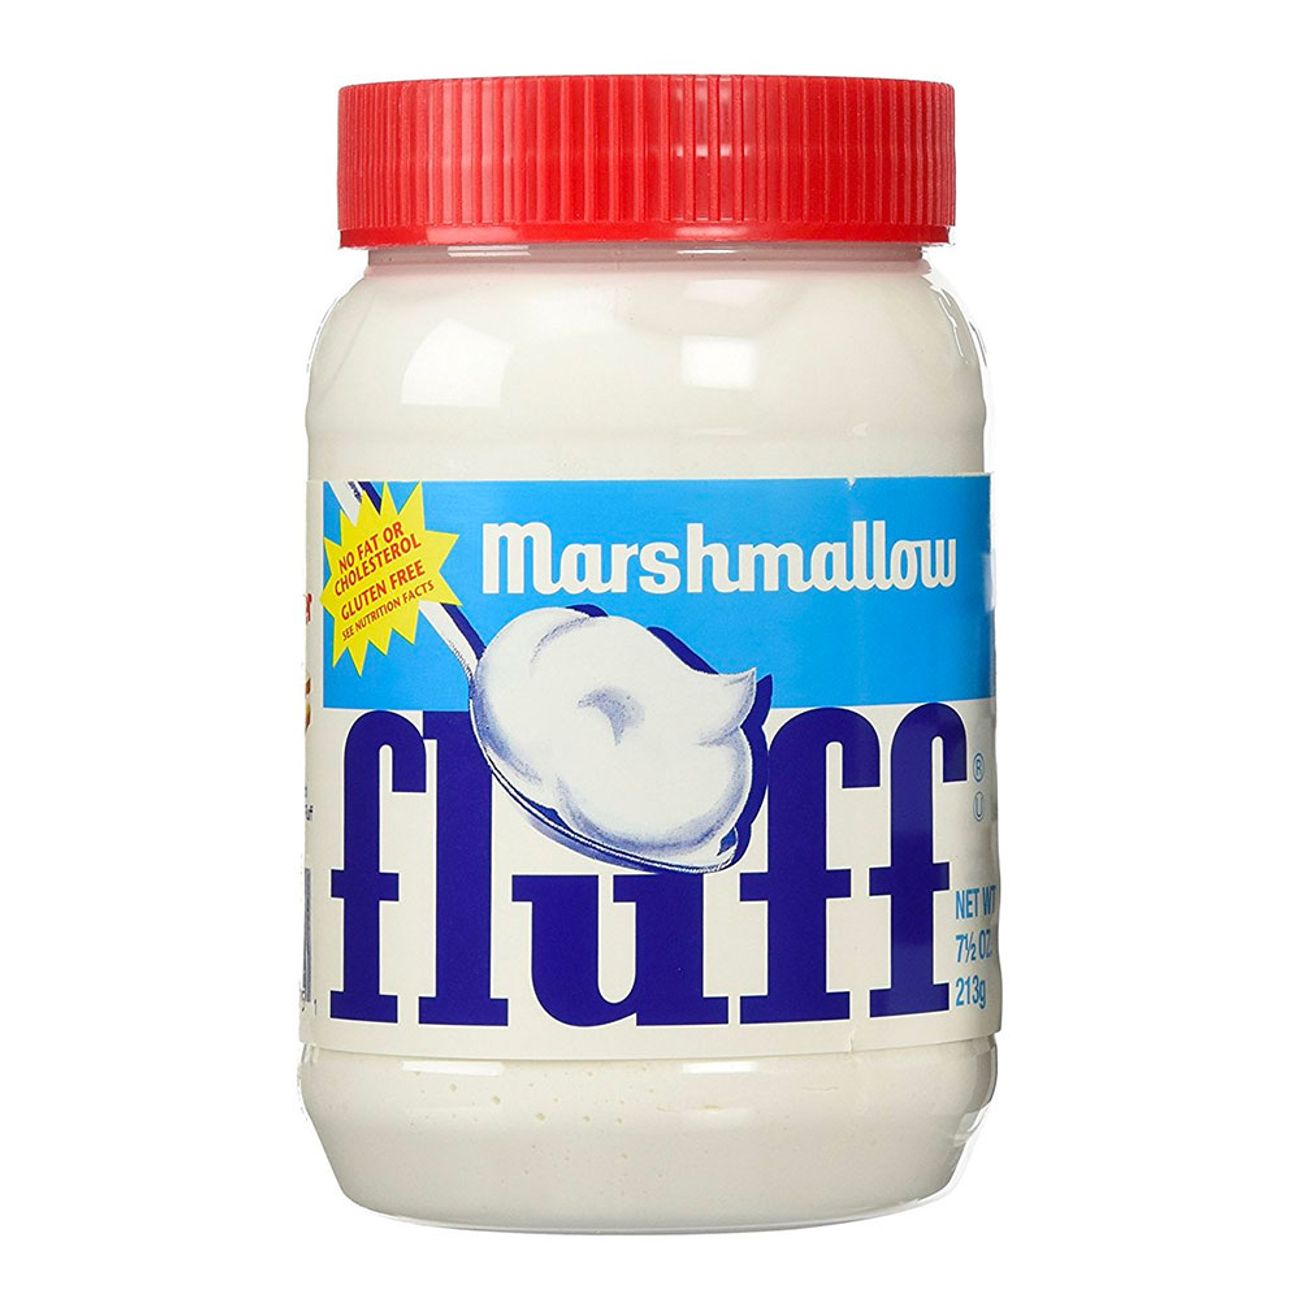 marshmallow-fluff-5